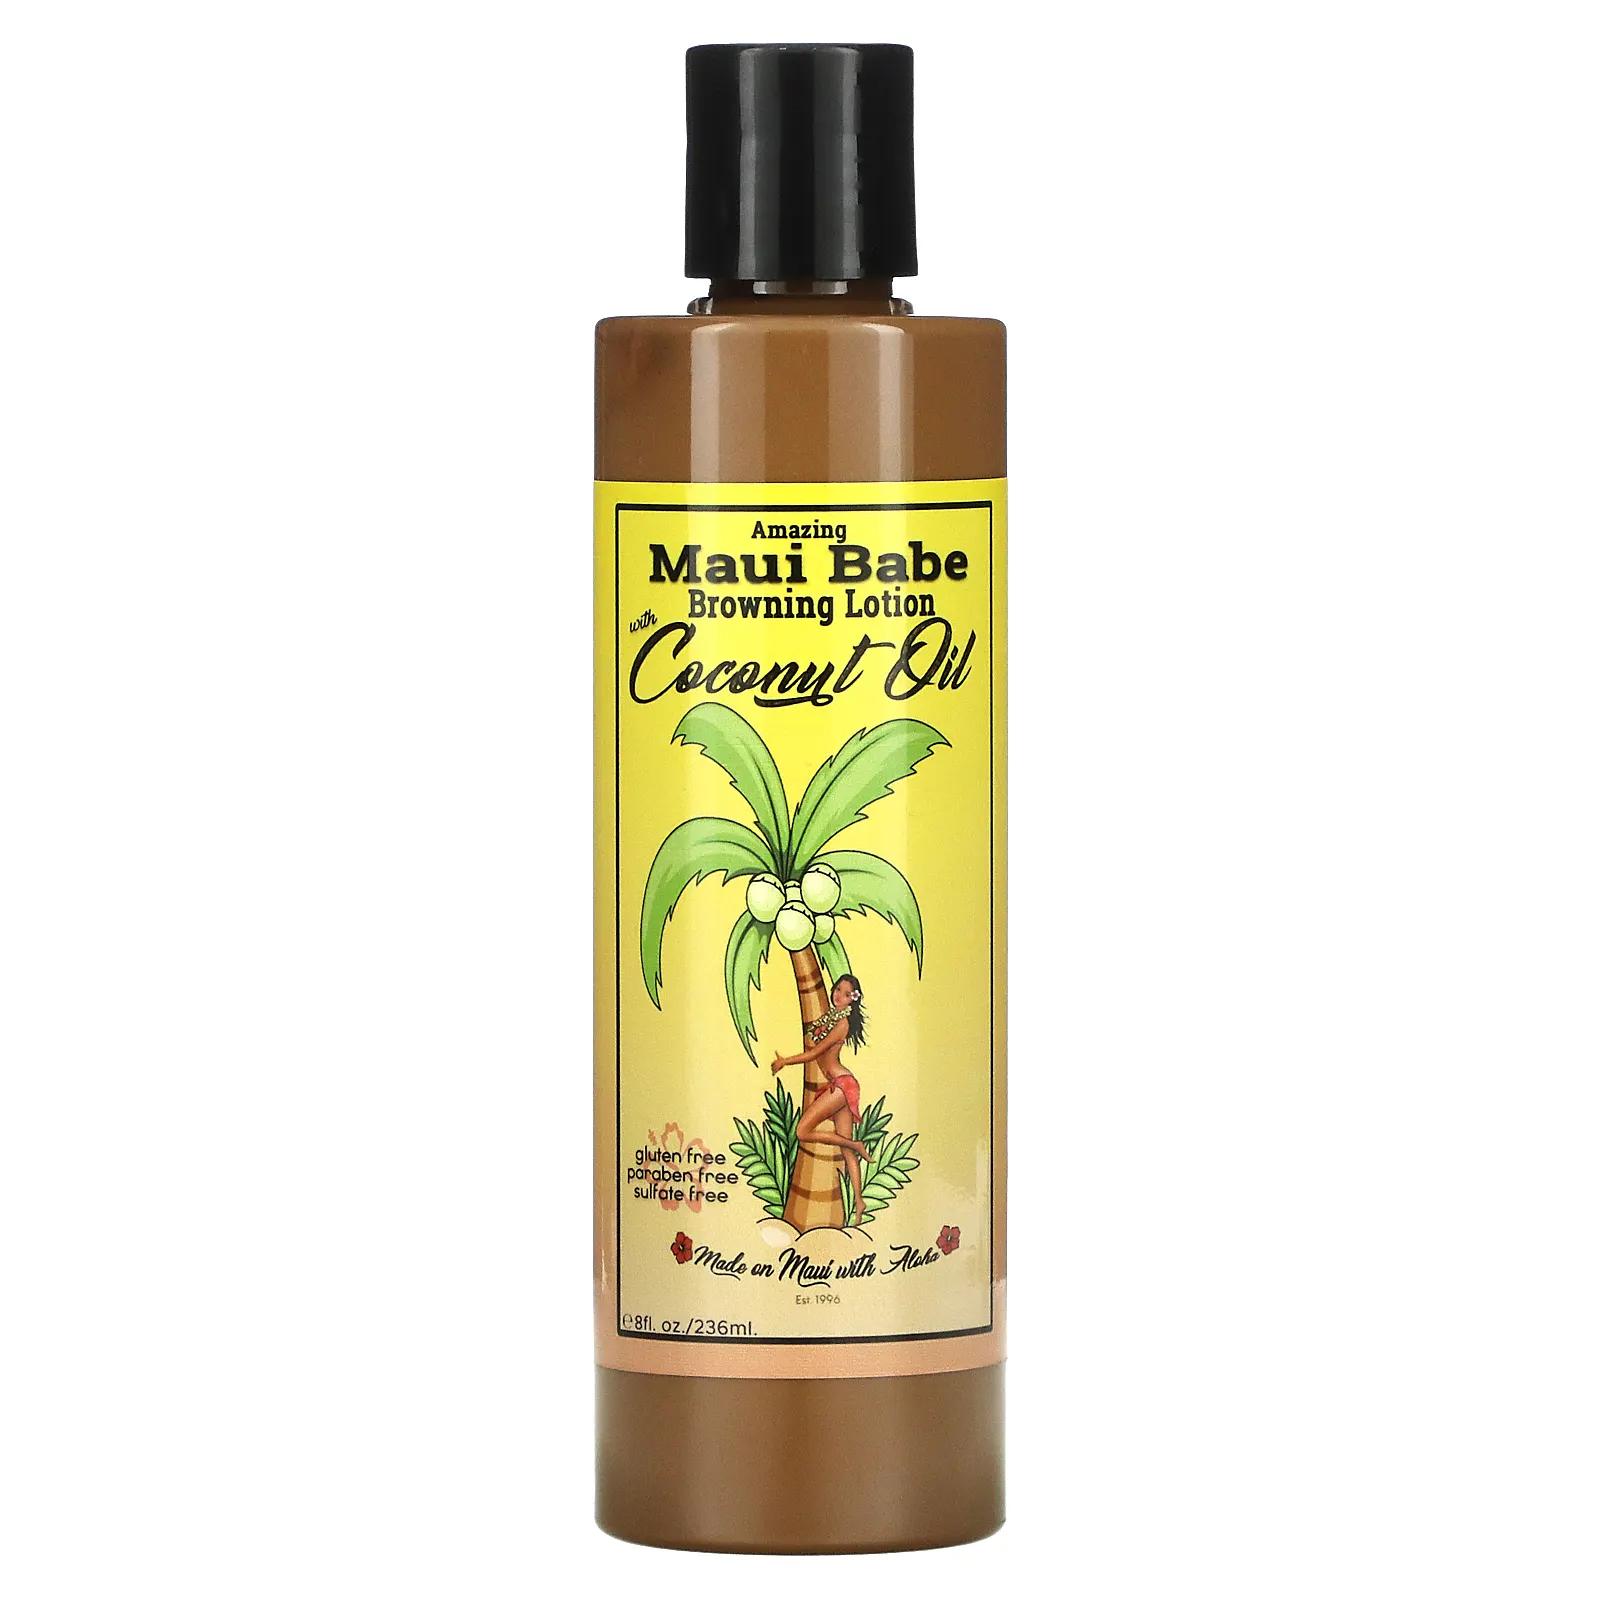 Maui Babe Amazing Browning Lotion with Coconut Oil 8 fl oz (236 ml) maui babe amazing browning lotion лосьон для загара с кокосовым маслом 236 мл 8 жидк унций